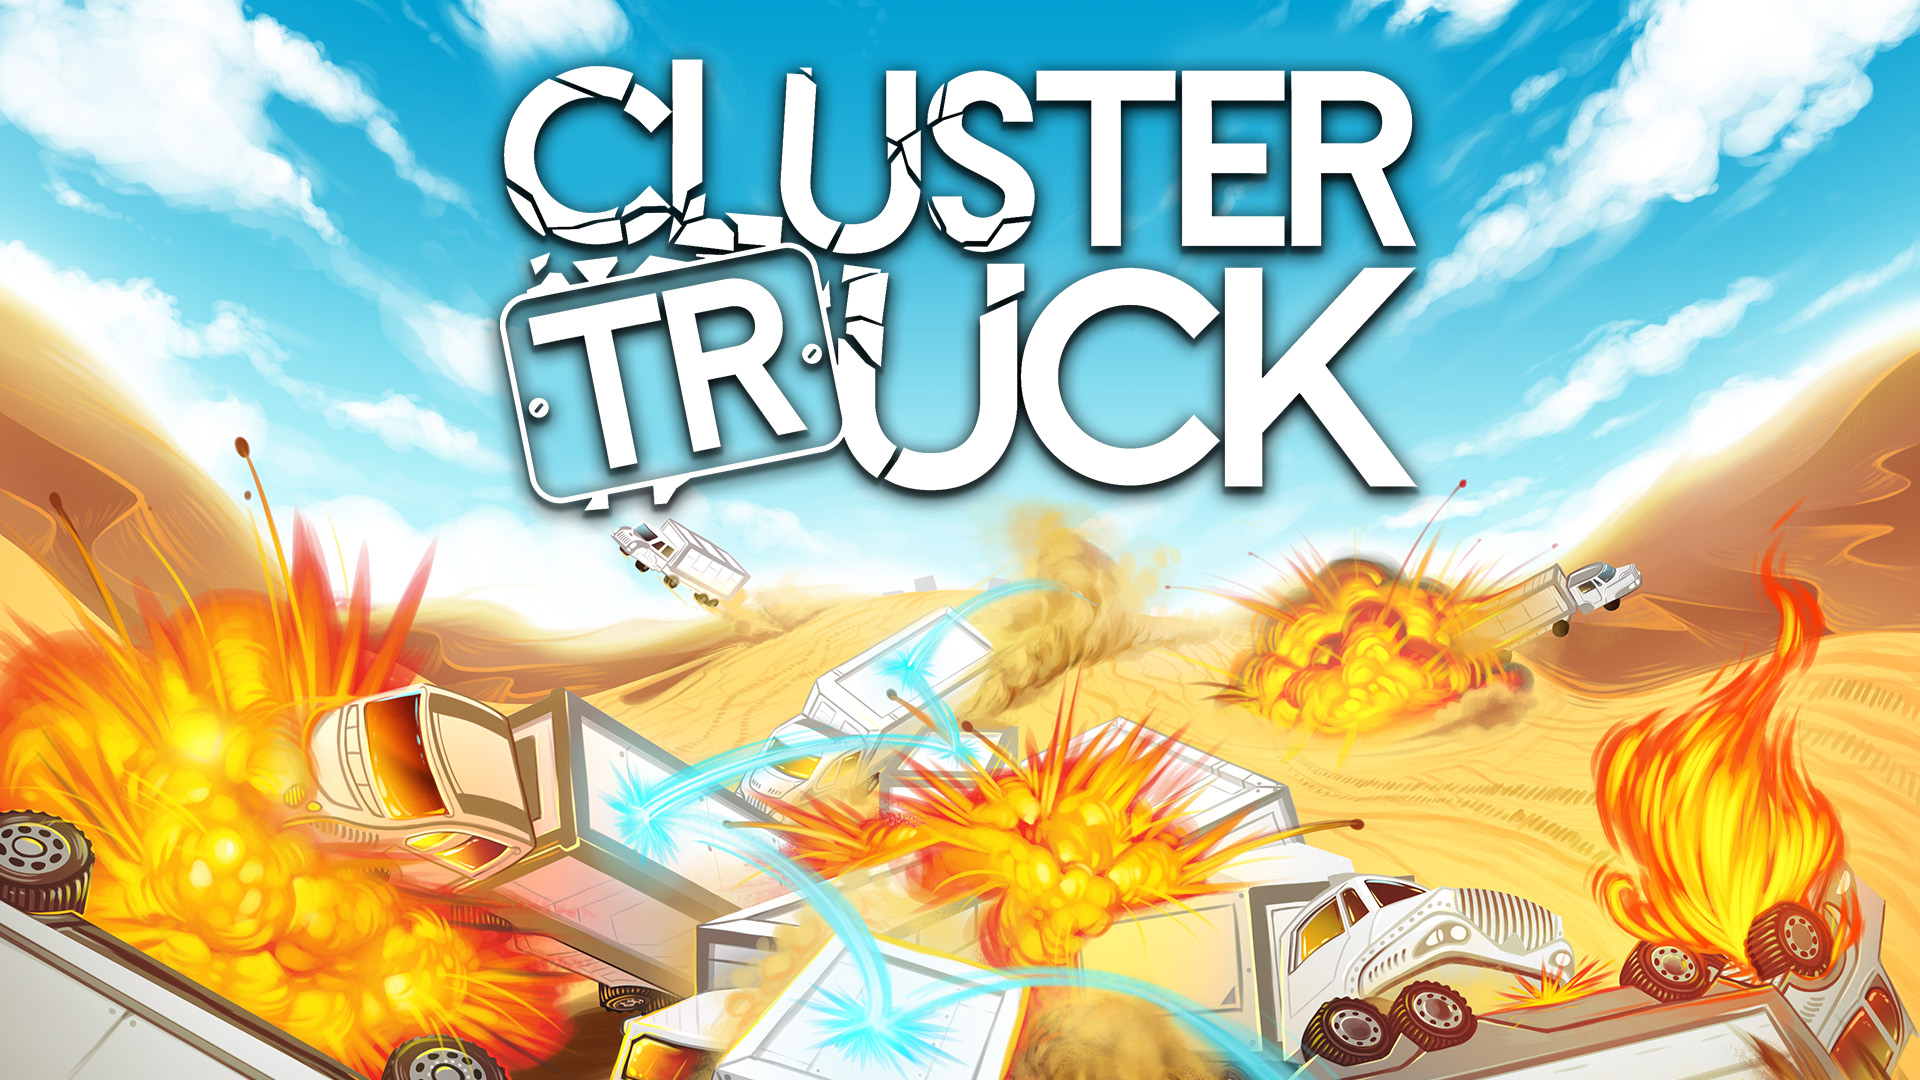 Clustertruck Mobile Game Full Version Download